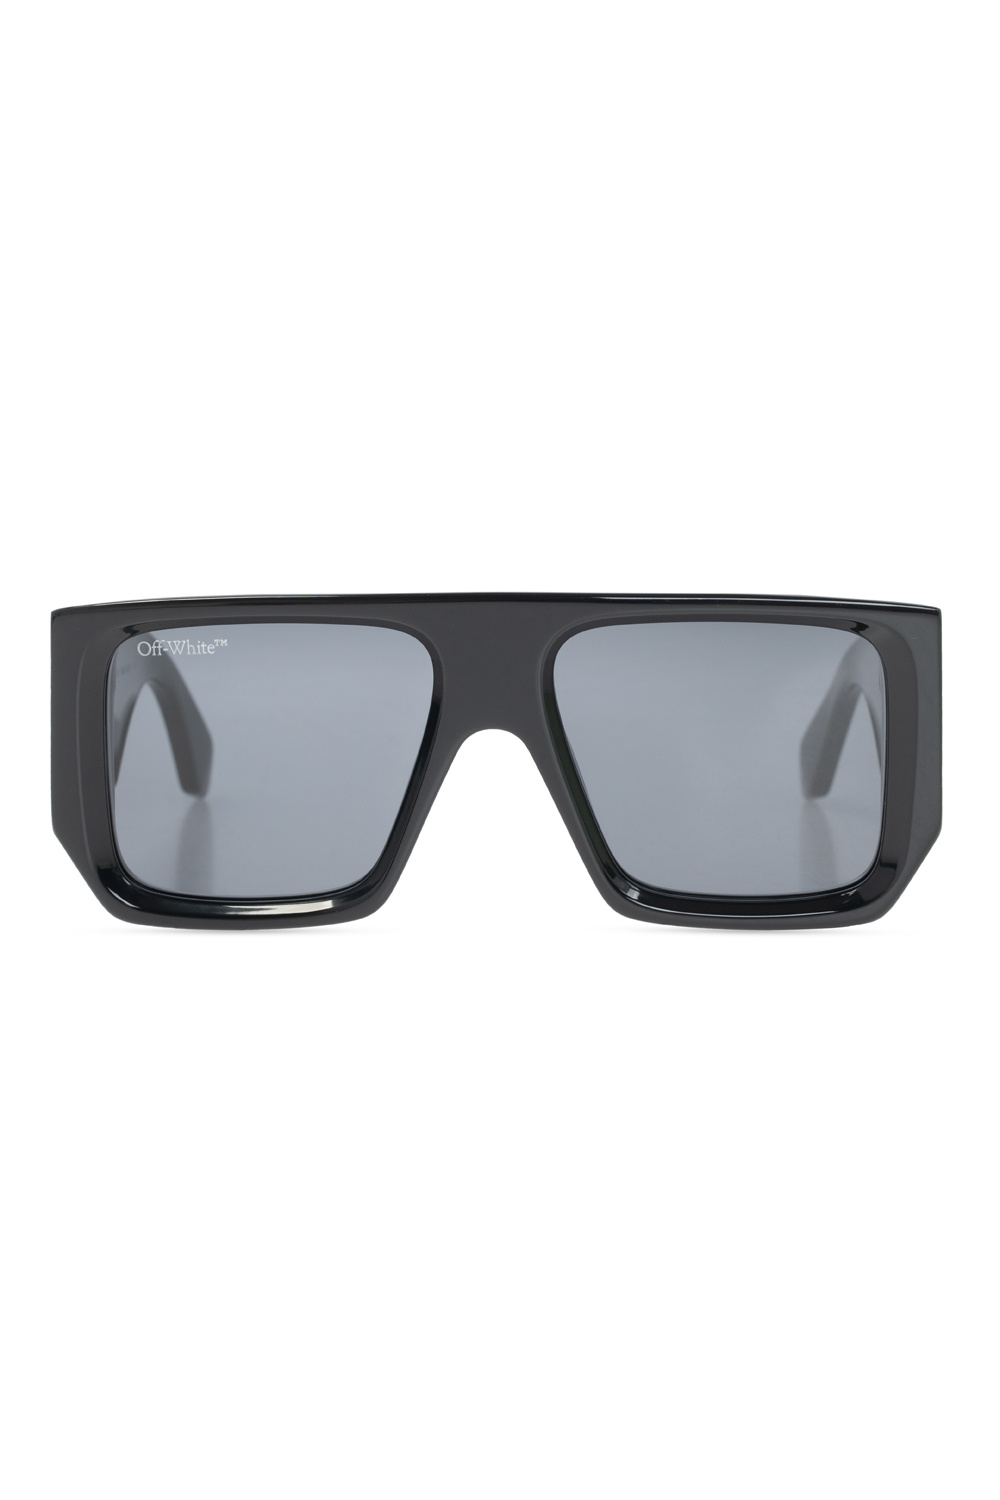 Off-White off white tropez rectangle frame sunglasses item